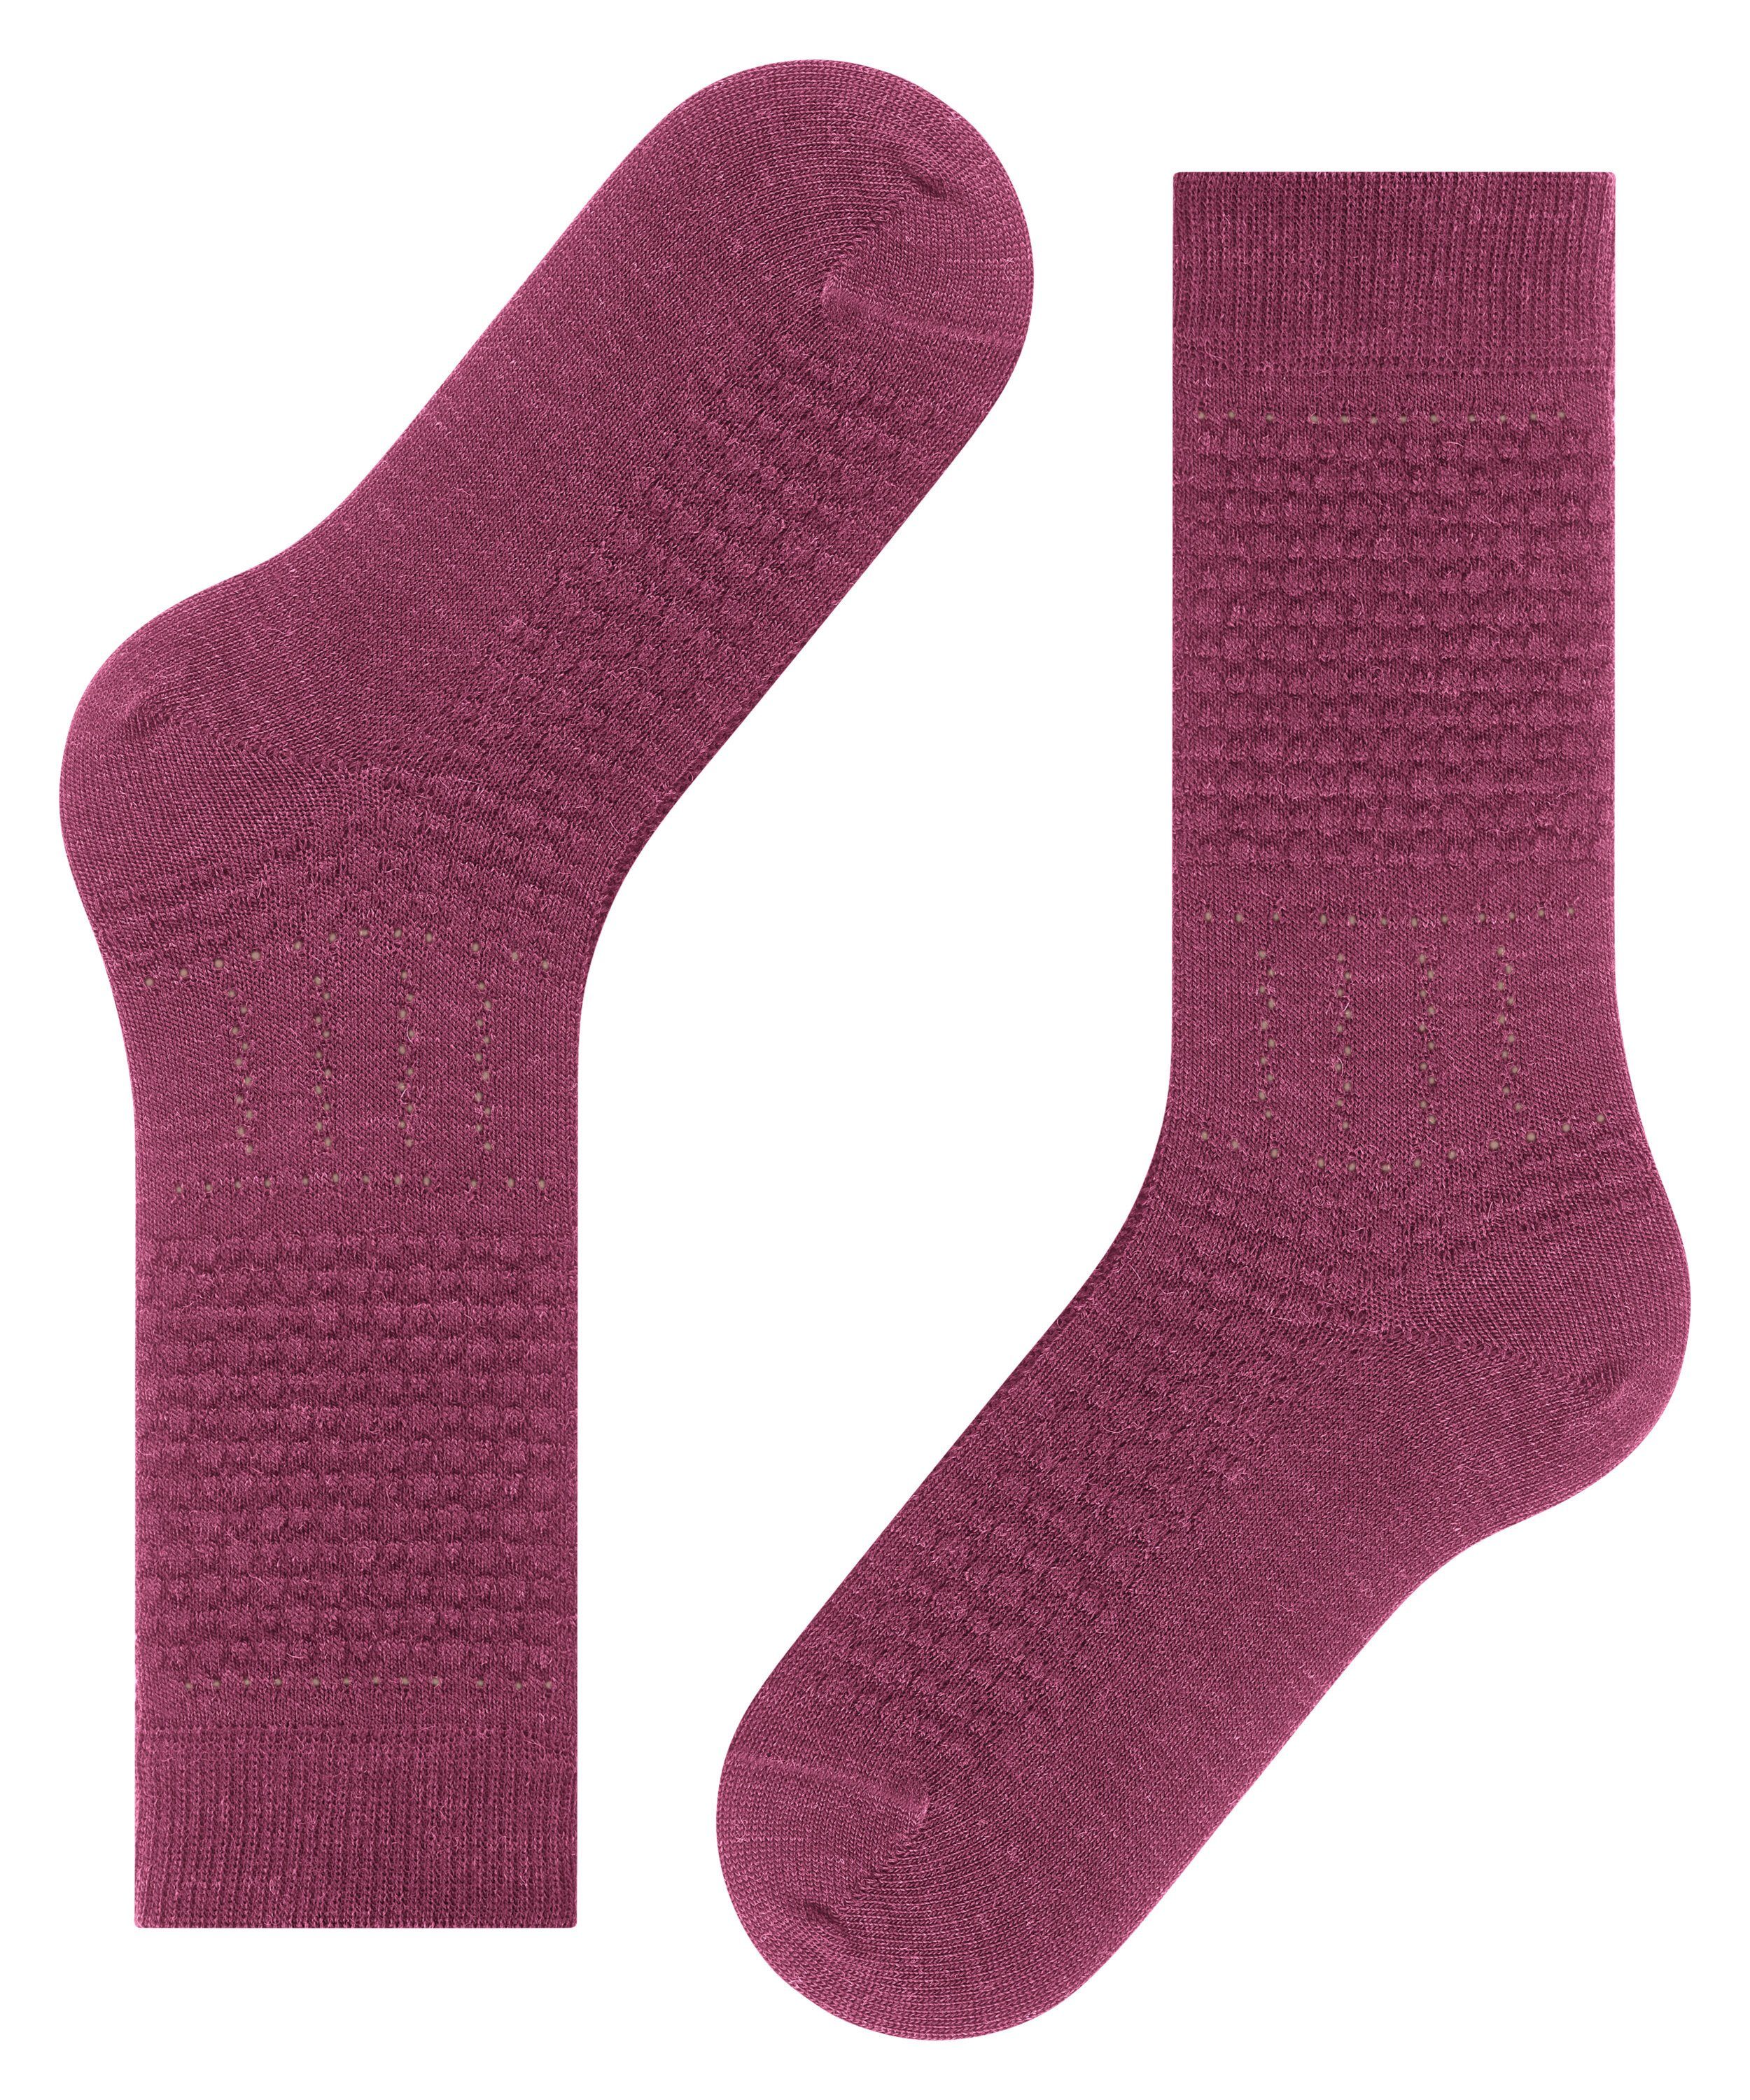 FALKE Socken Fibre red (8236) Root (1-Paar) plum